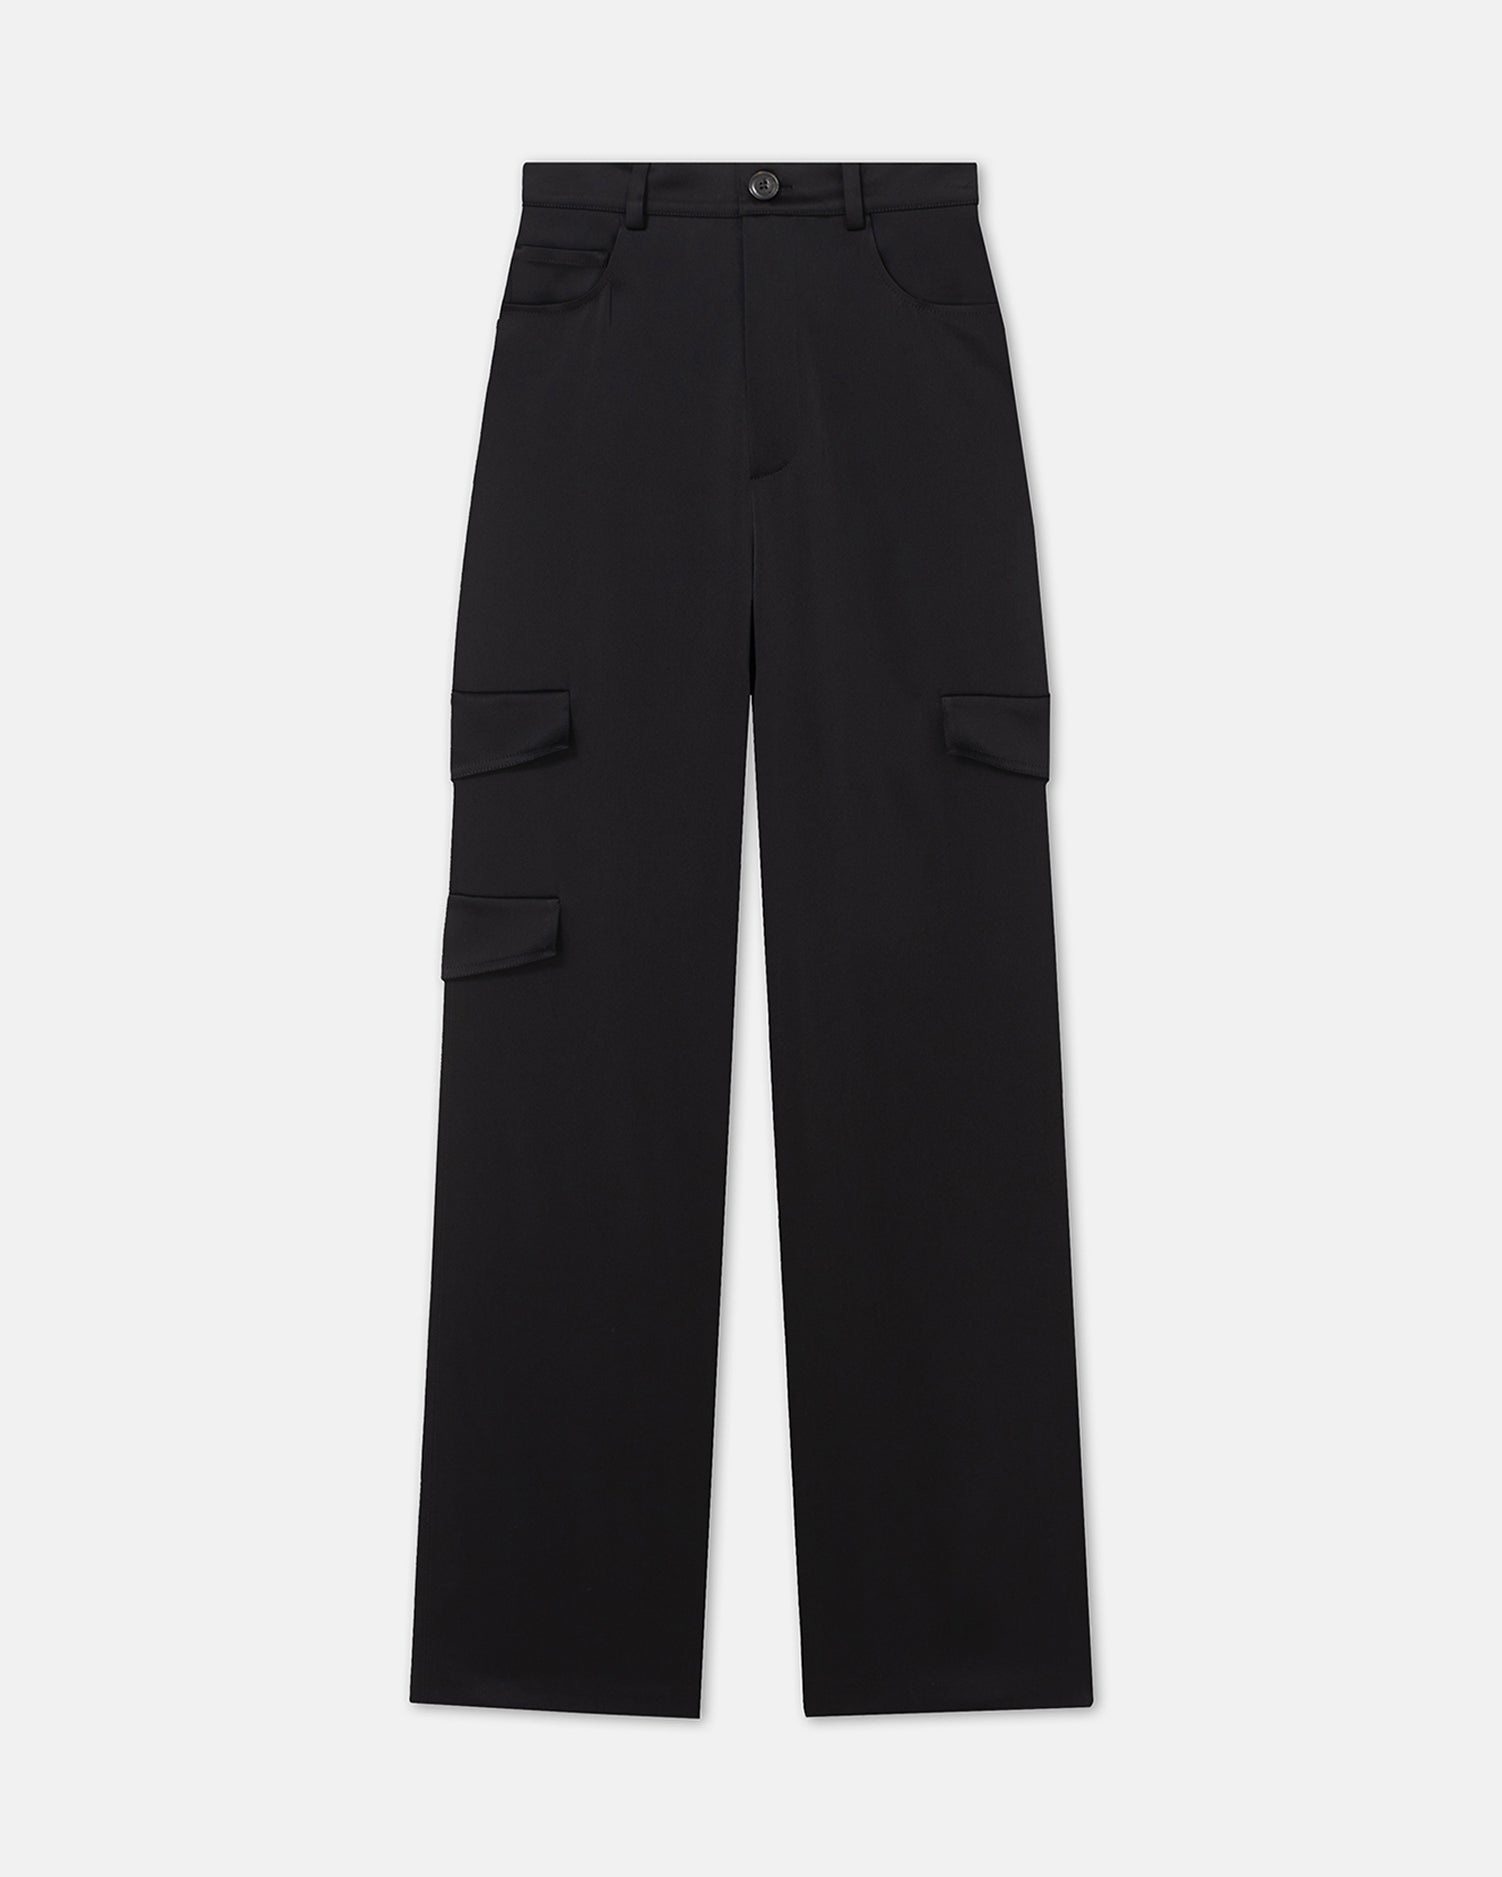 Senza Undergarment Slip Pants Black - 99 Rands